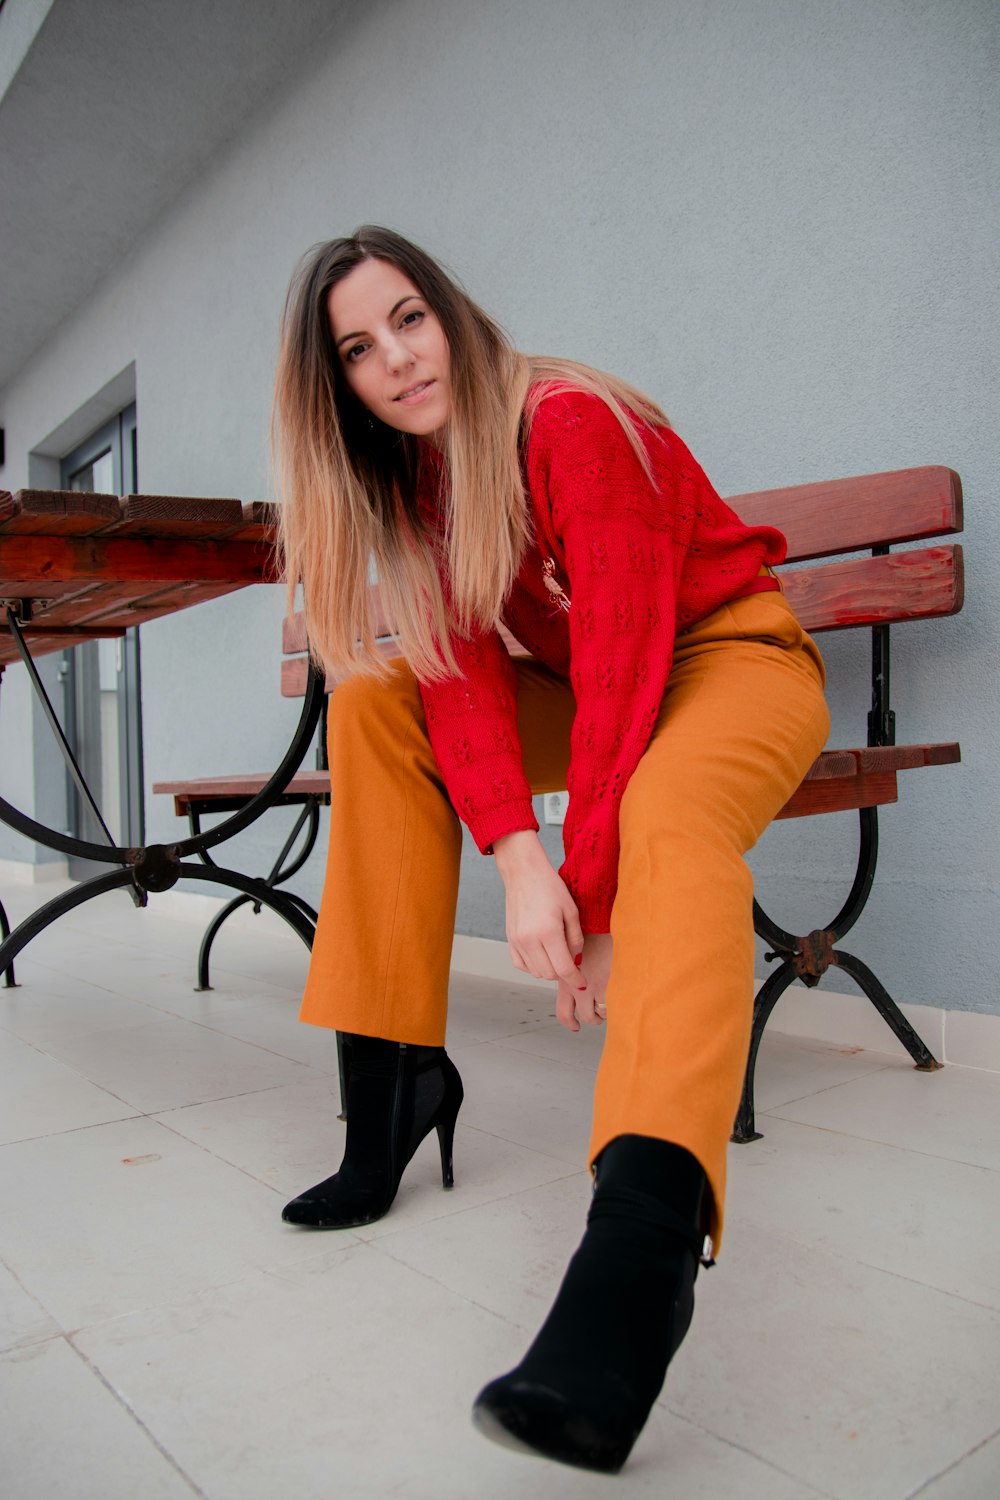 woman sitting on bench wearing red jacket and orange pants